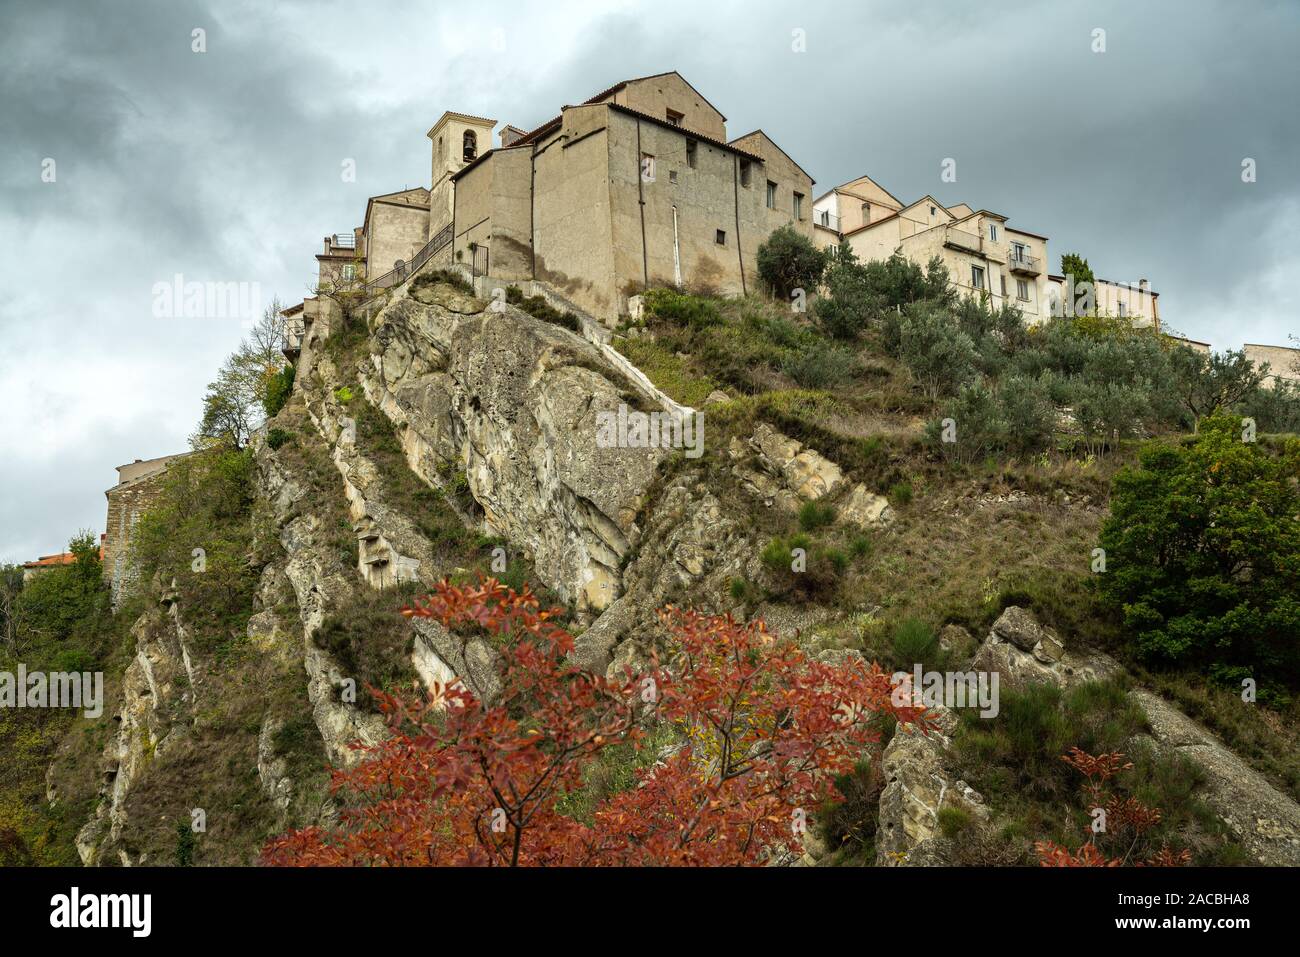 Zona habitada de Castelverrino desde abajo, Isernia, Molise, Itali, Europa Foto de stock